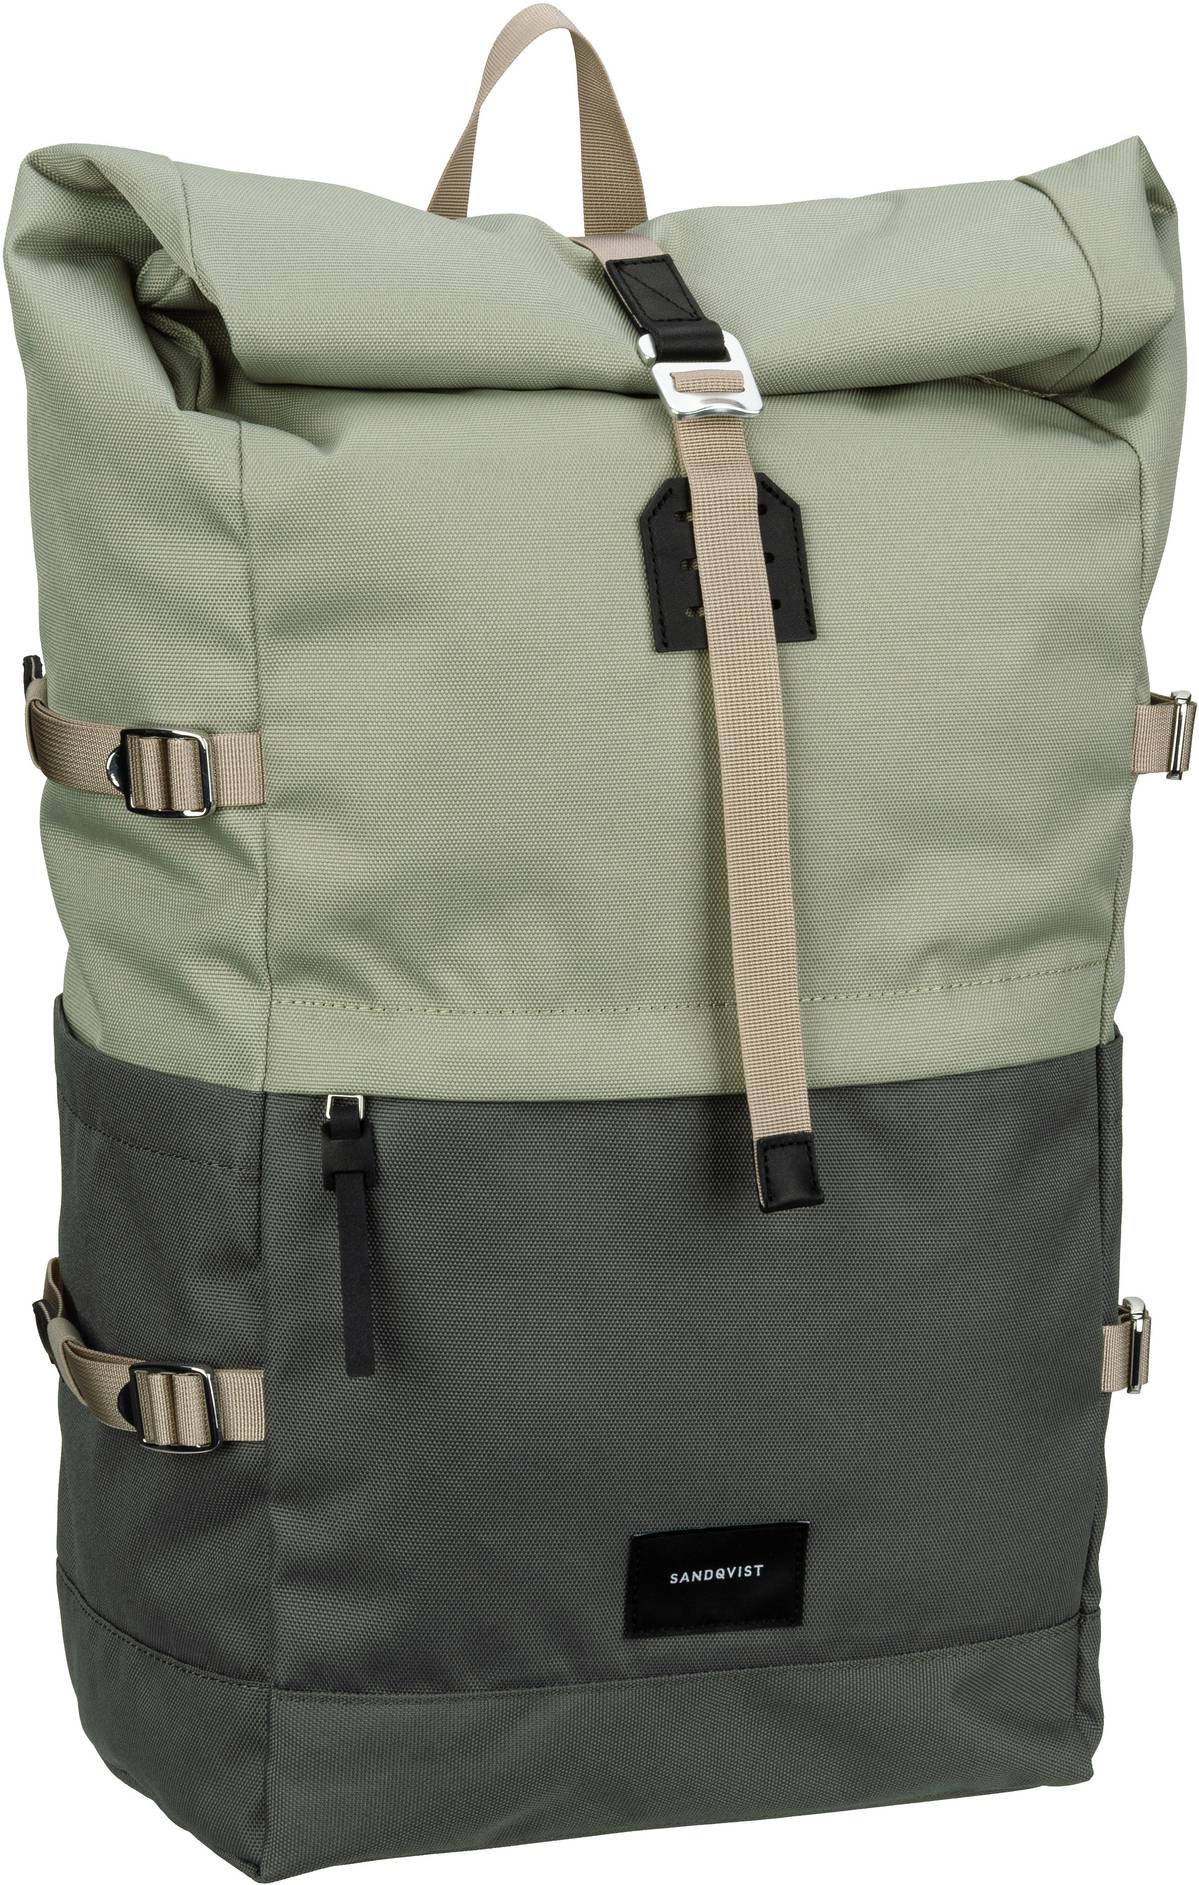 Sandqvist Bernt Rolltop Backpack - Multi Dew Green/Night Grey